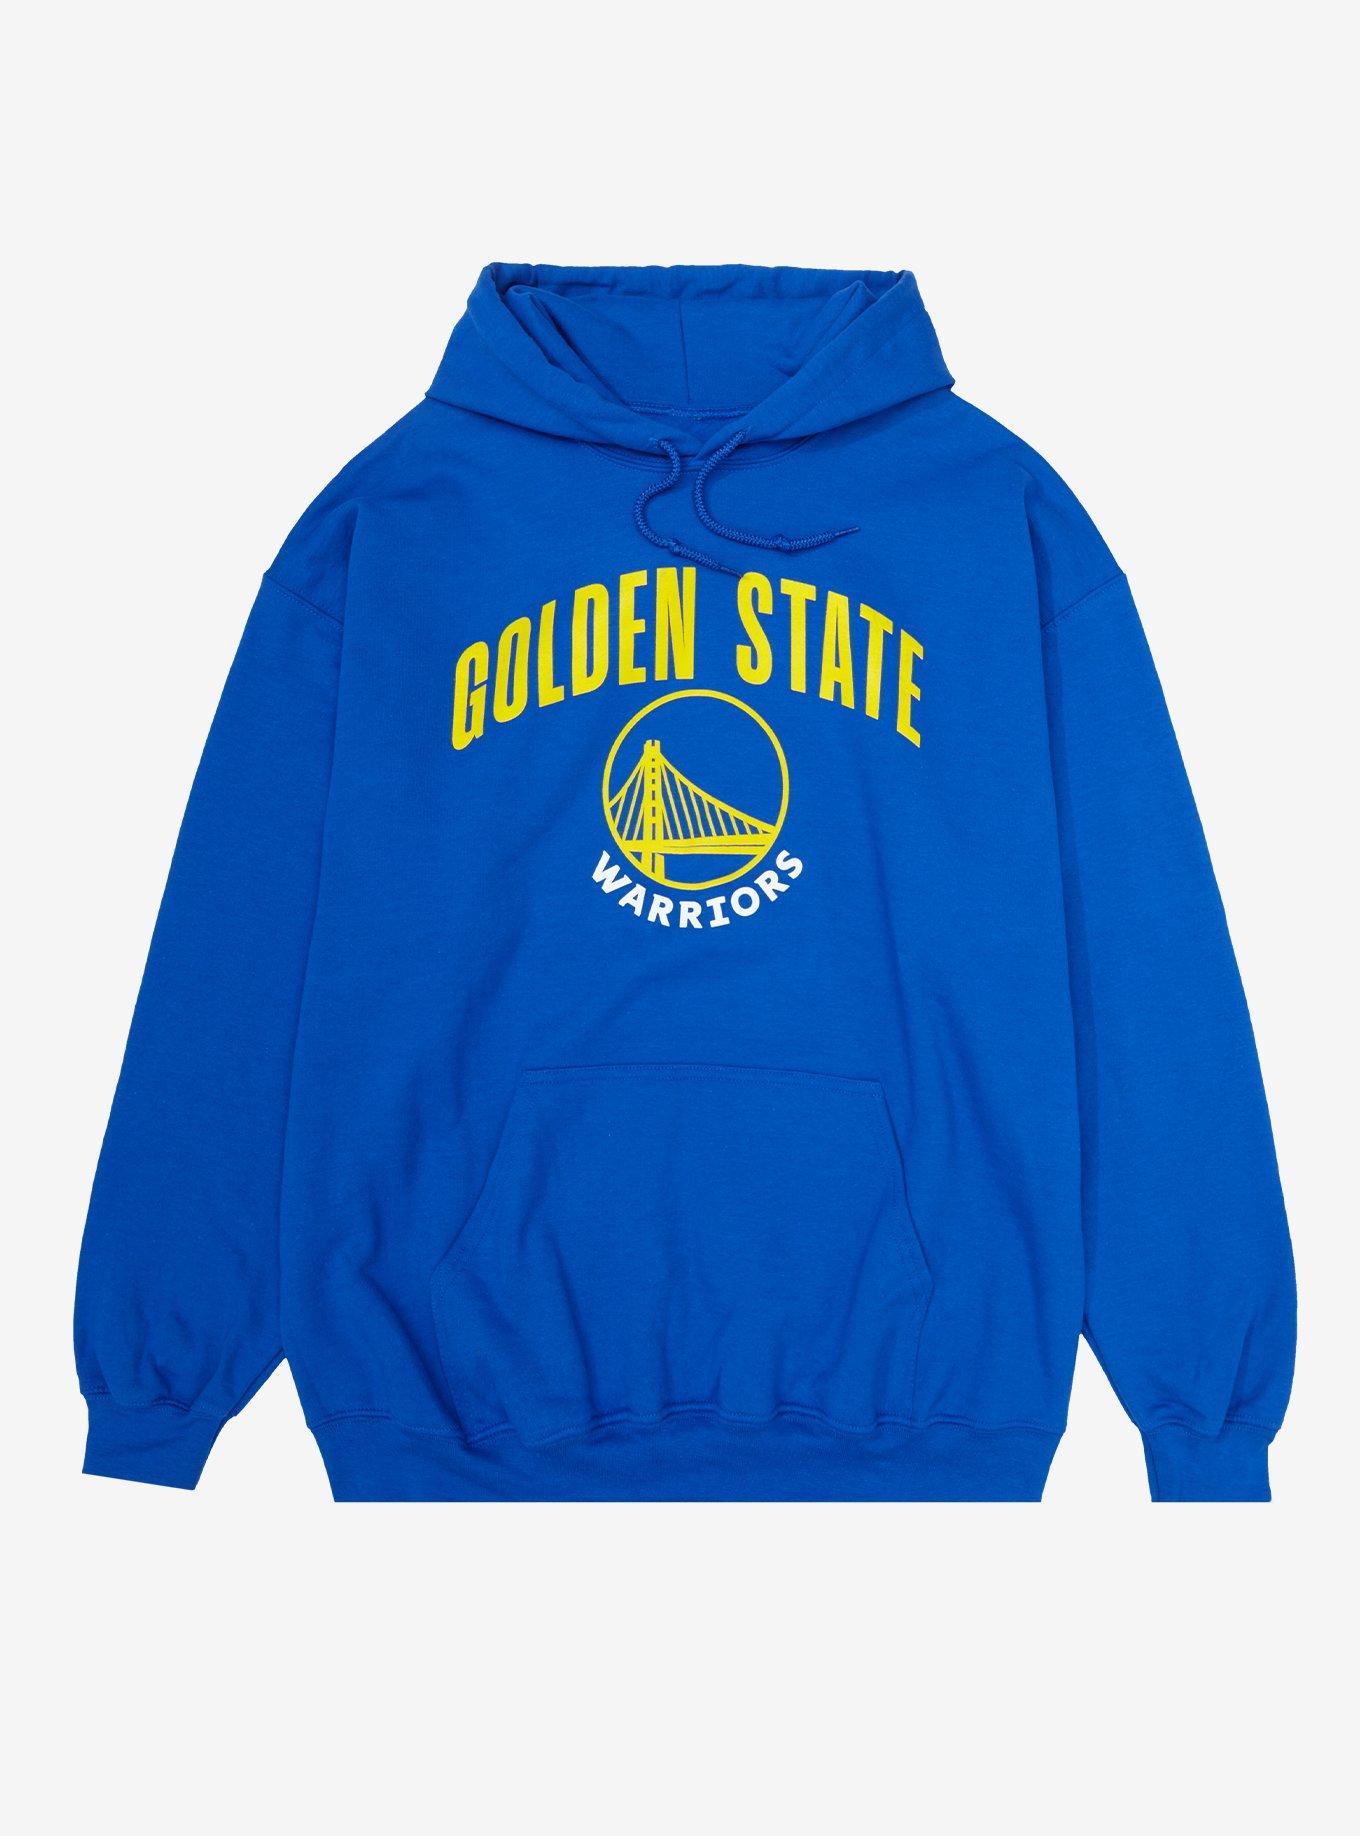 Golden State Warriors Sweater Tshirt Hoodie Mens Womens Kids